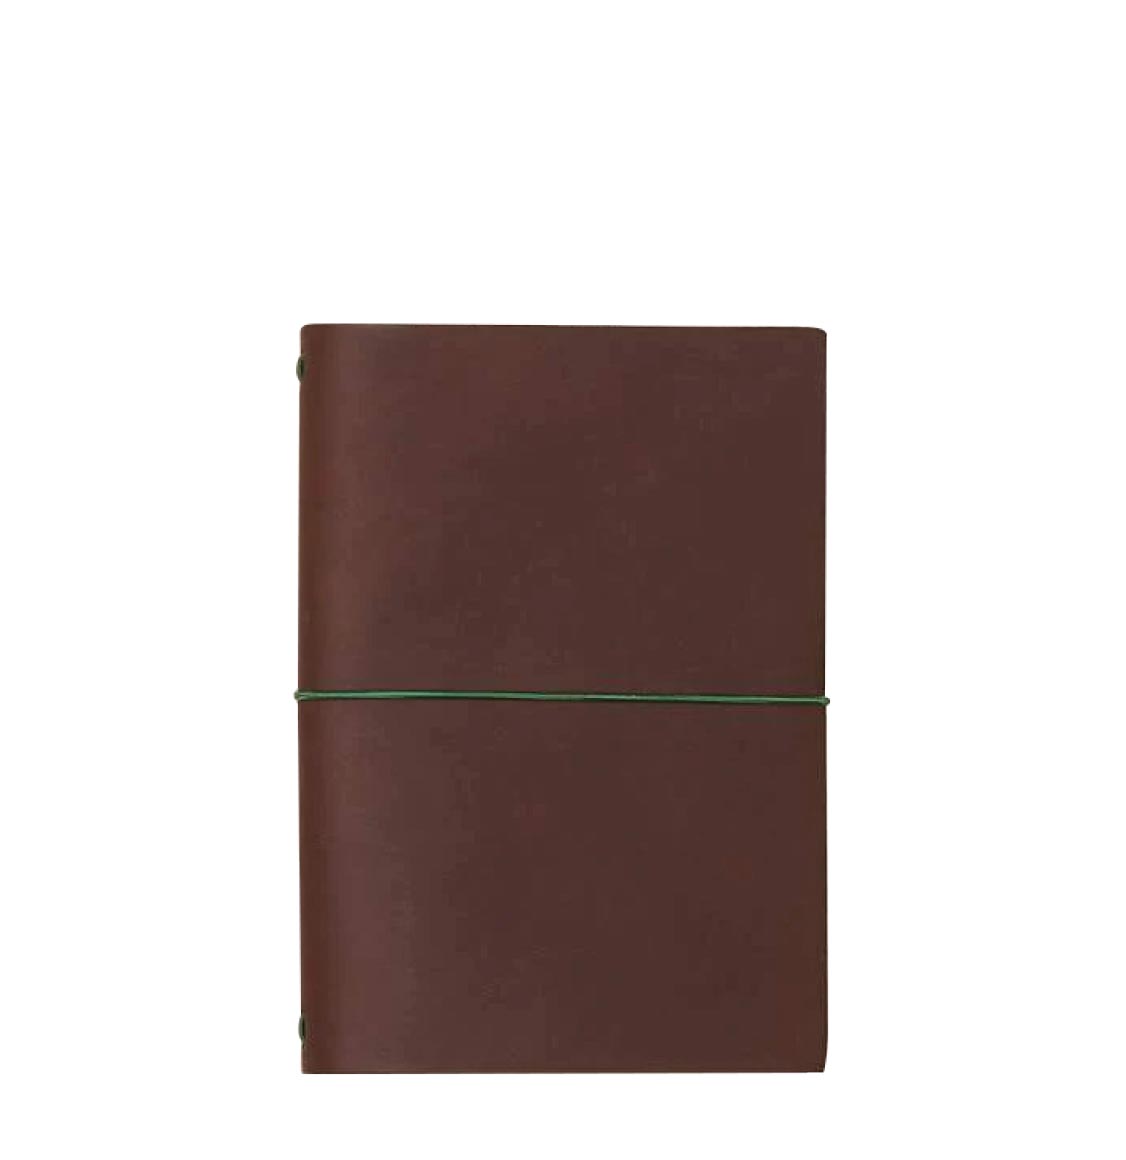 Paper Republic Grand Voyageur Pocket Leather Journal Chestnut